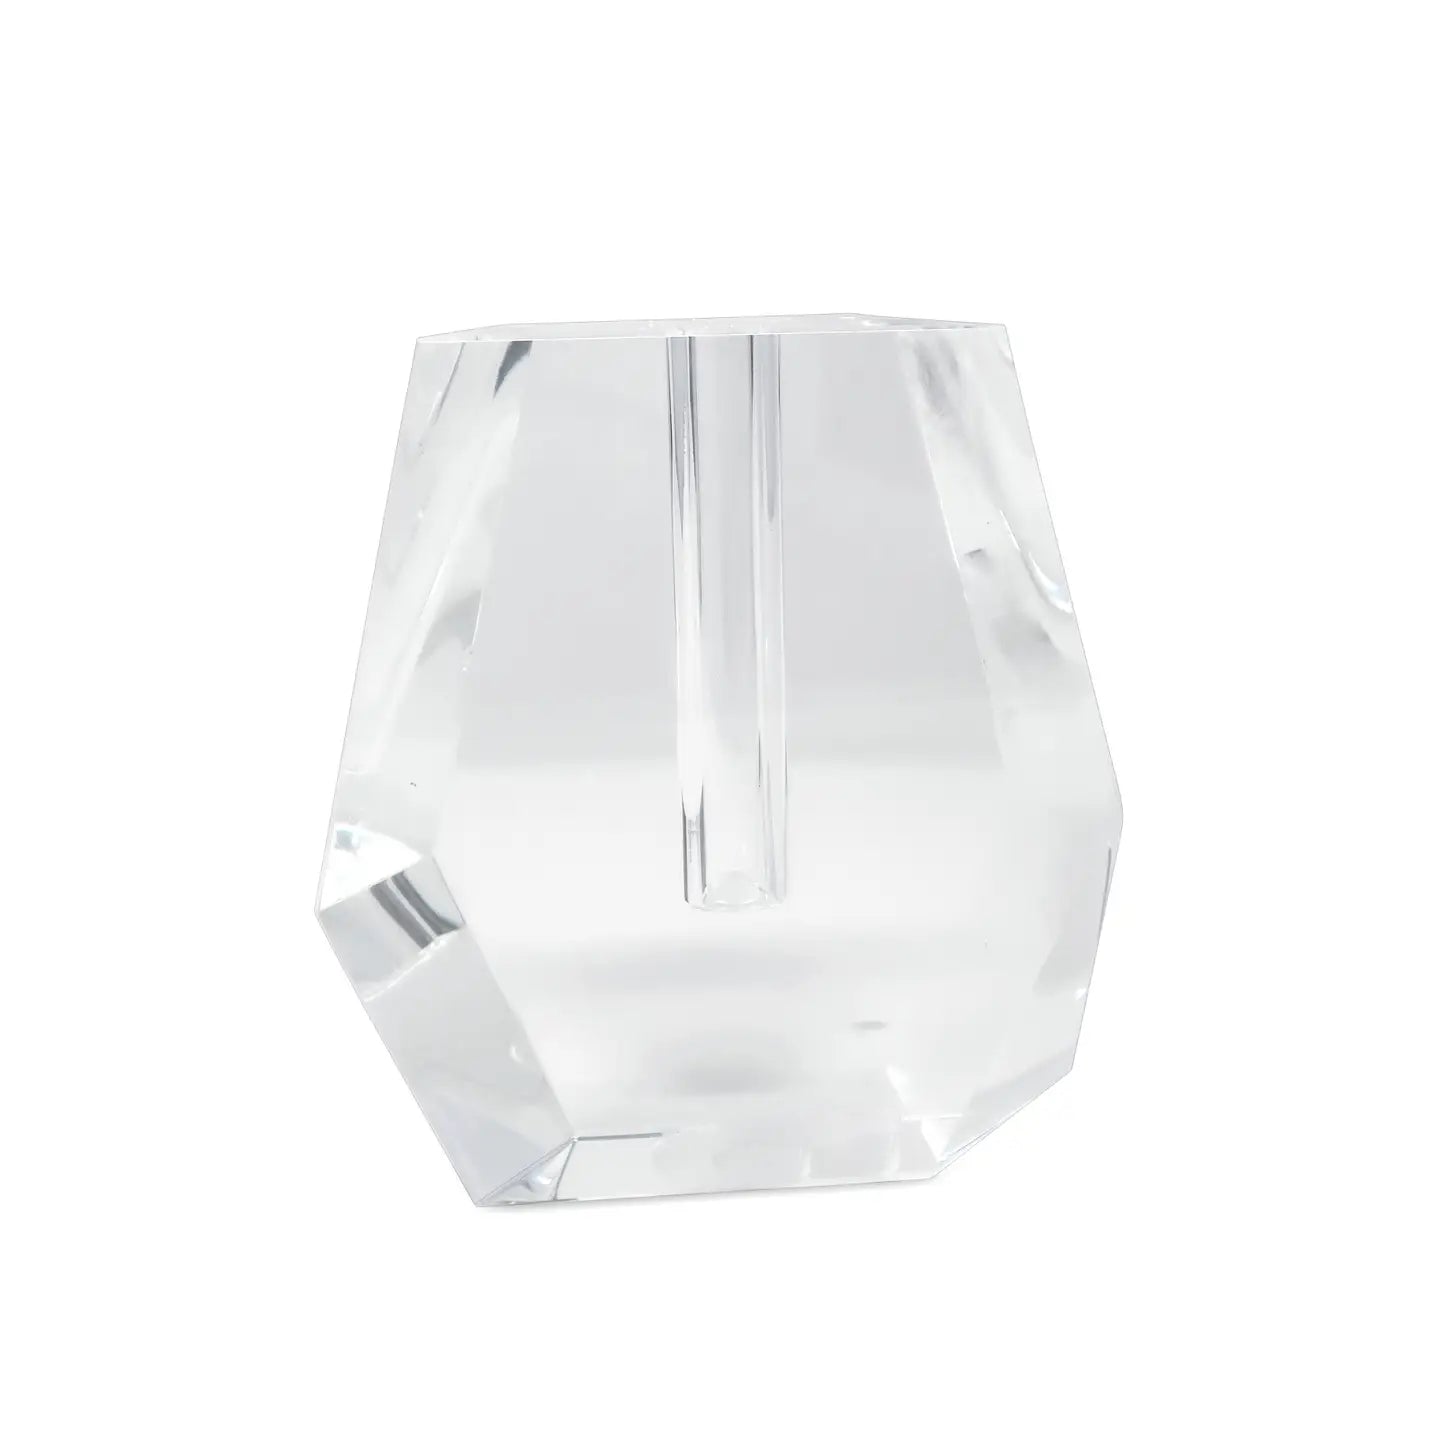 Crystal Bud Vase Dimensional Design - Medium